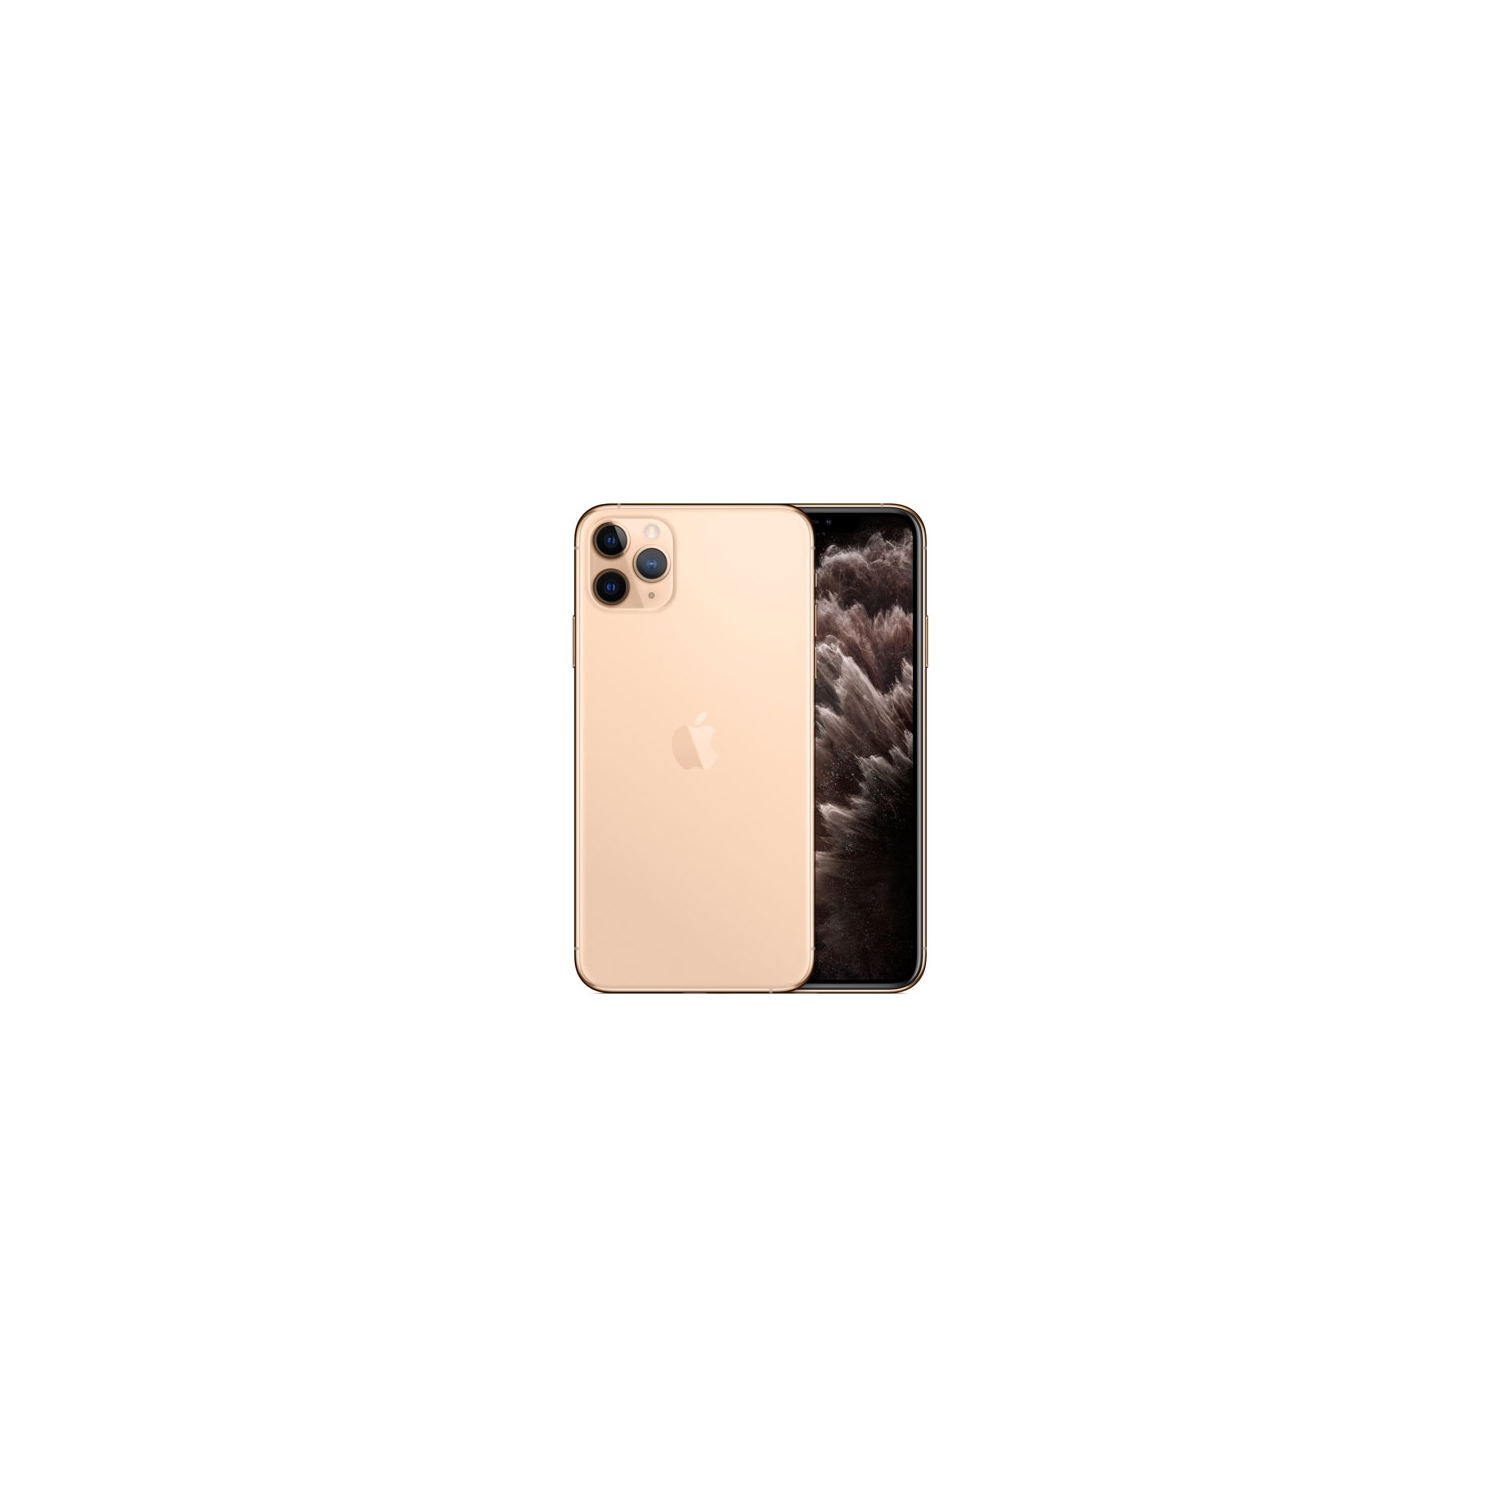 Refurbished (Good) - Apple iPhone 11 Pro Max 64GB Smartphone - Gold - Unlocked